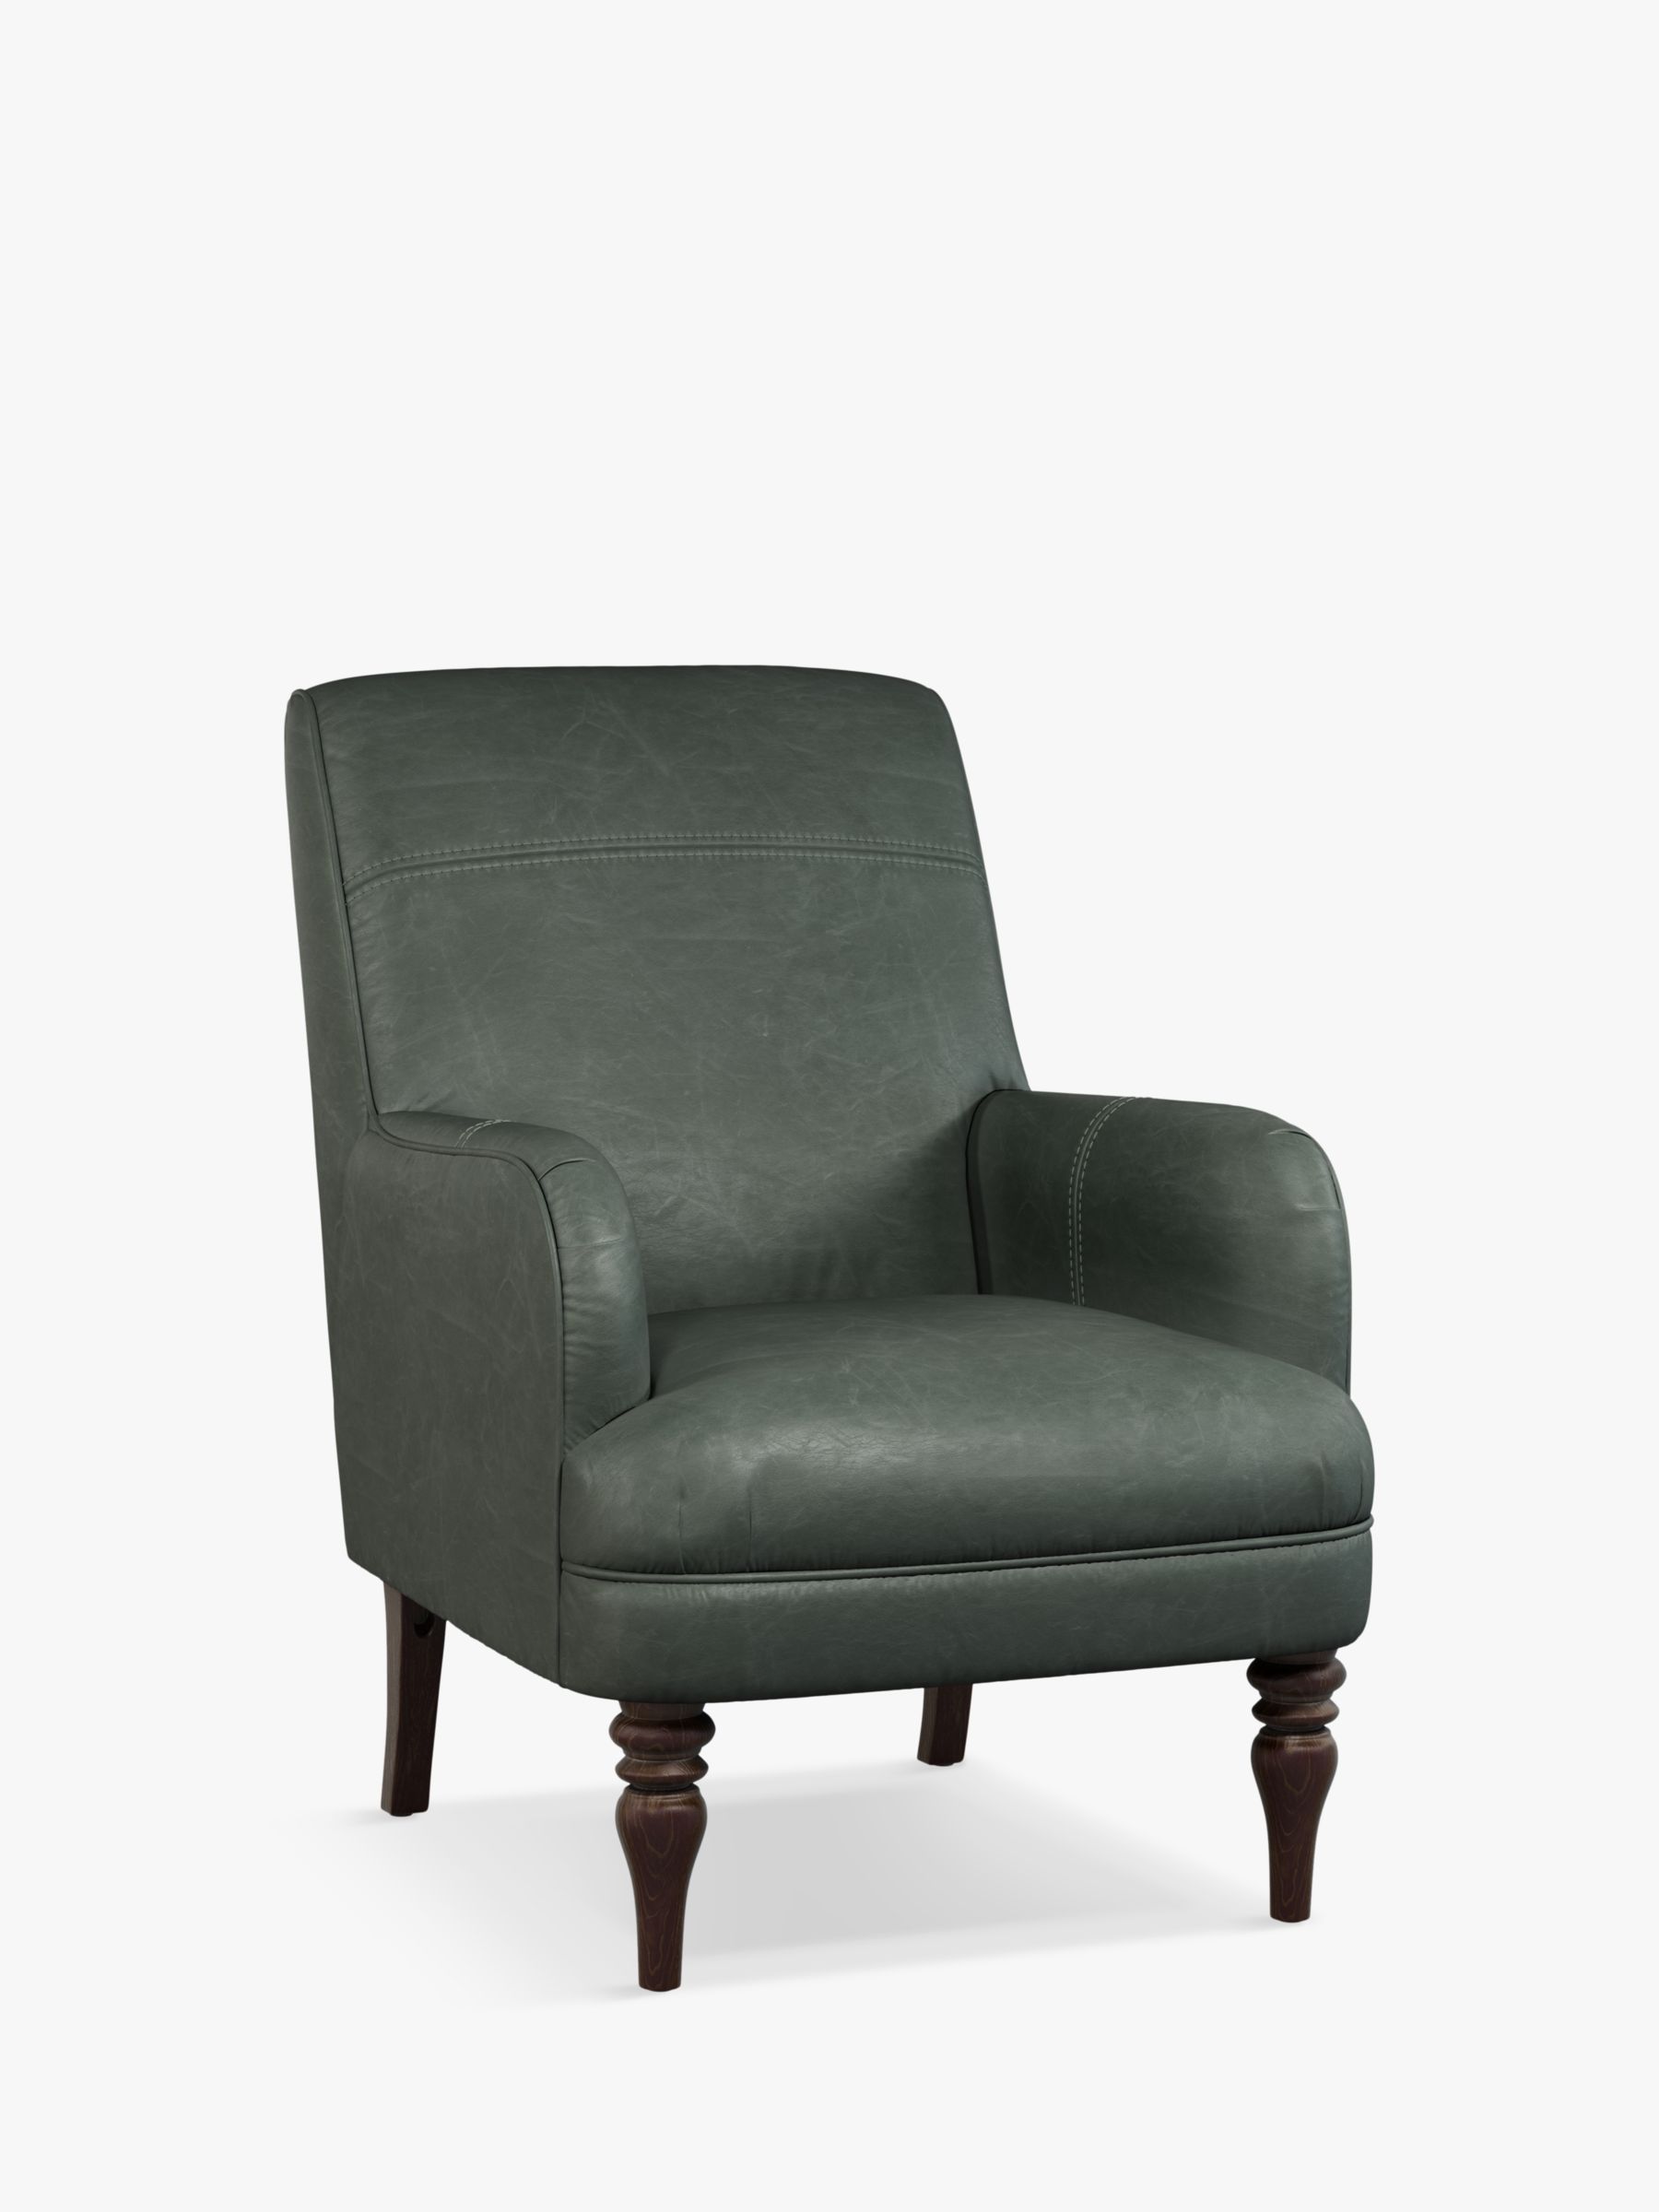 John Lewis Sterling Leather Armchair, Dark Leg